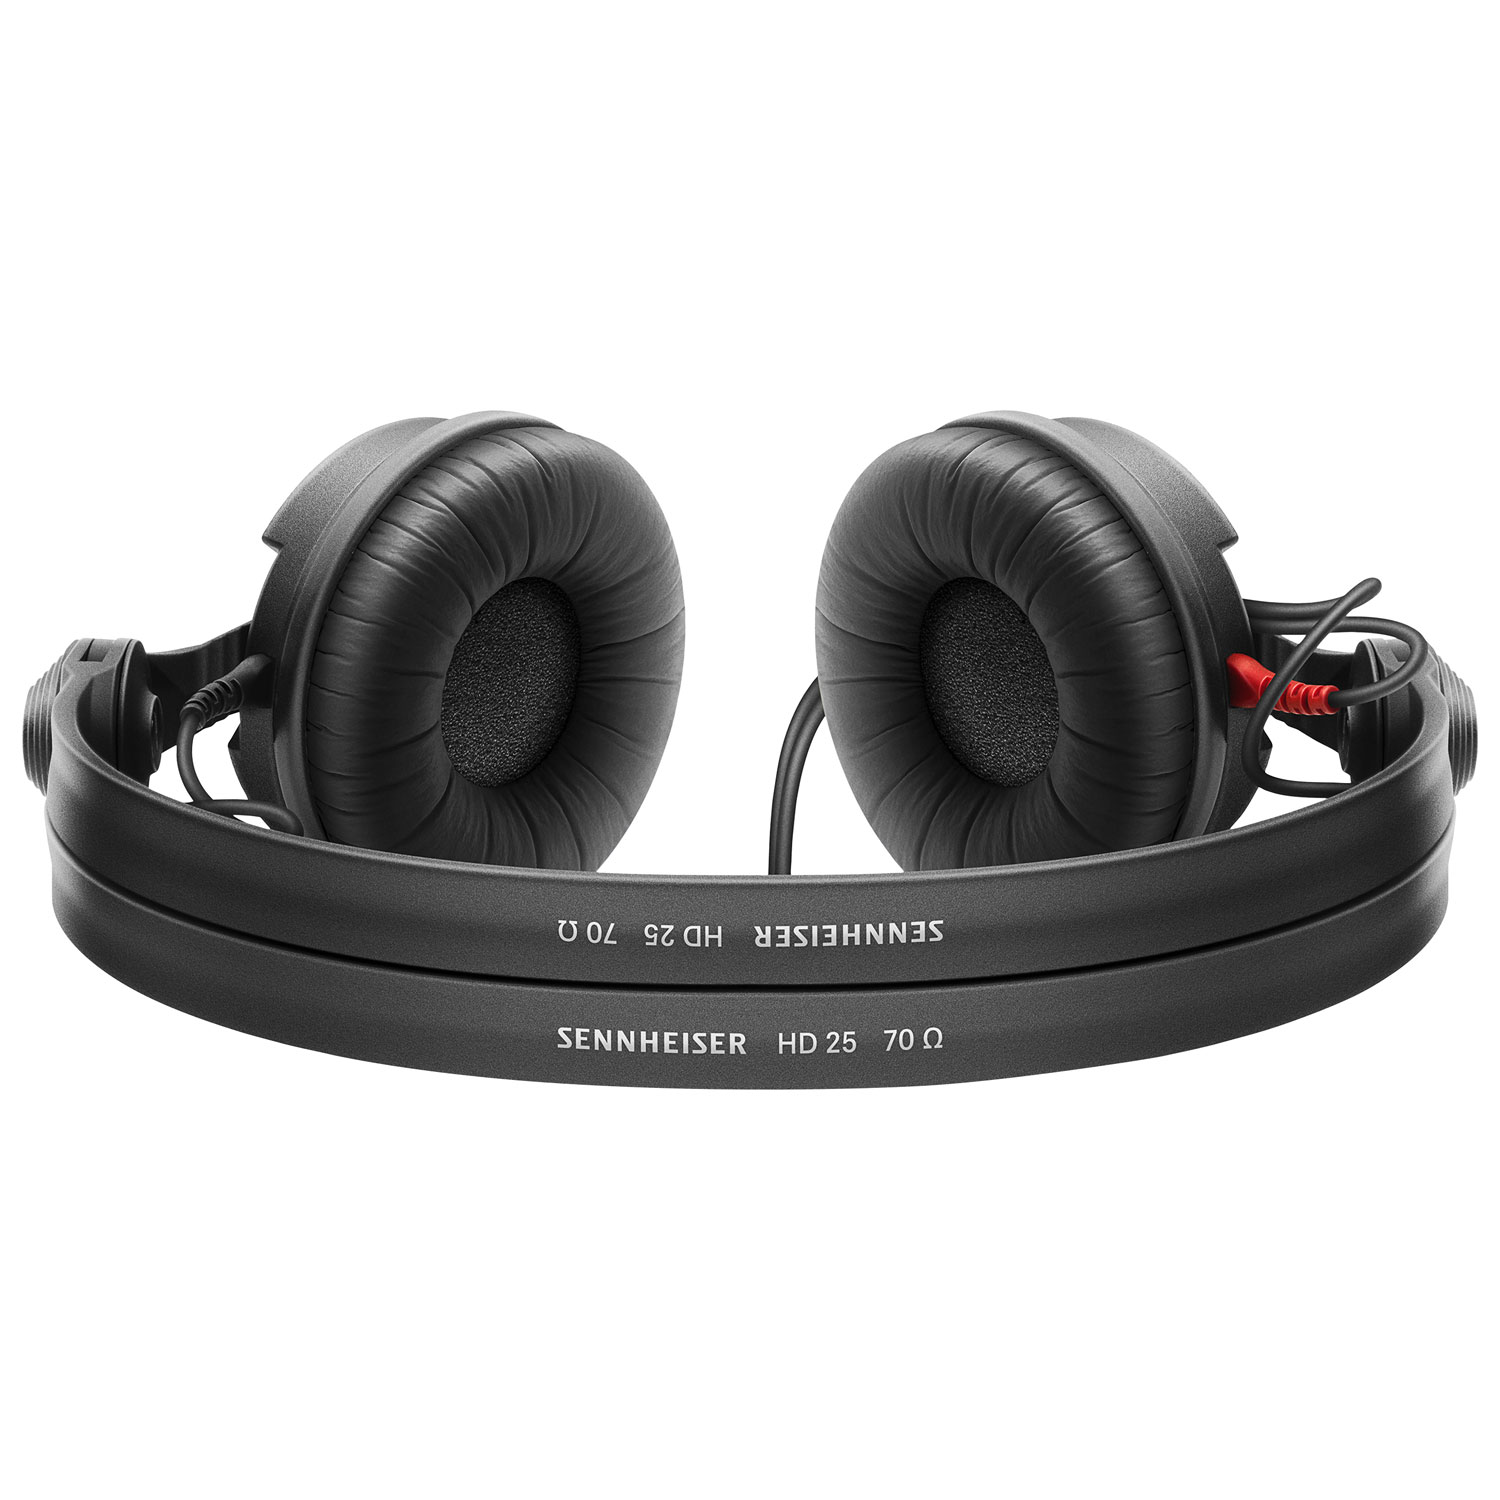 Sennheiser HD 25 On-Ear Sound Isolating Monitor Headphones